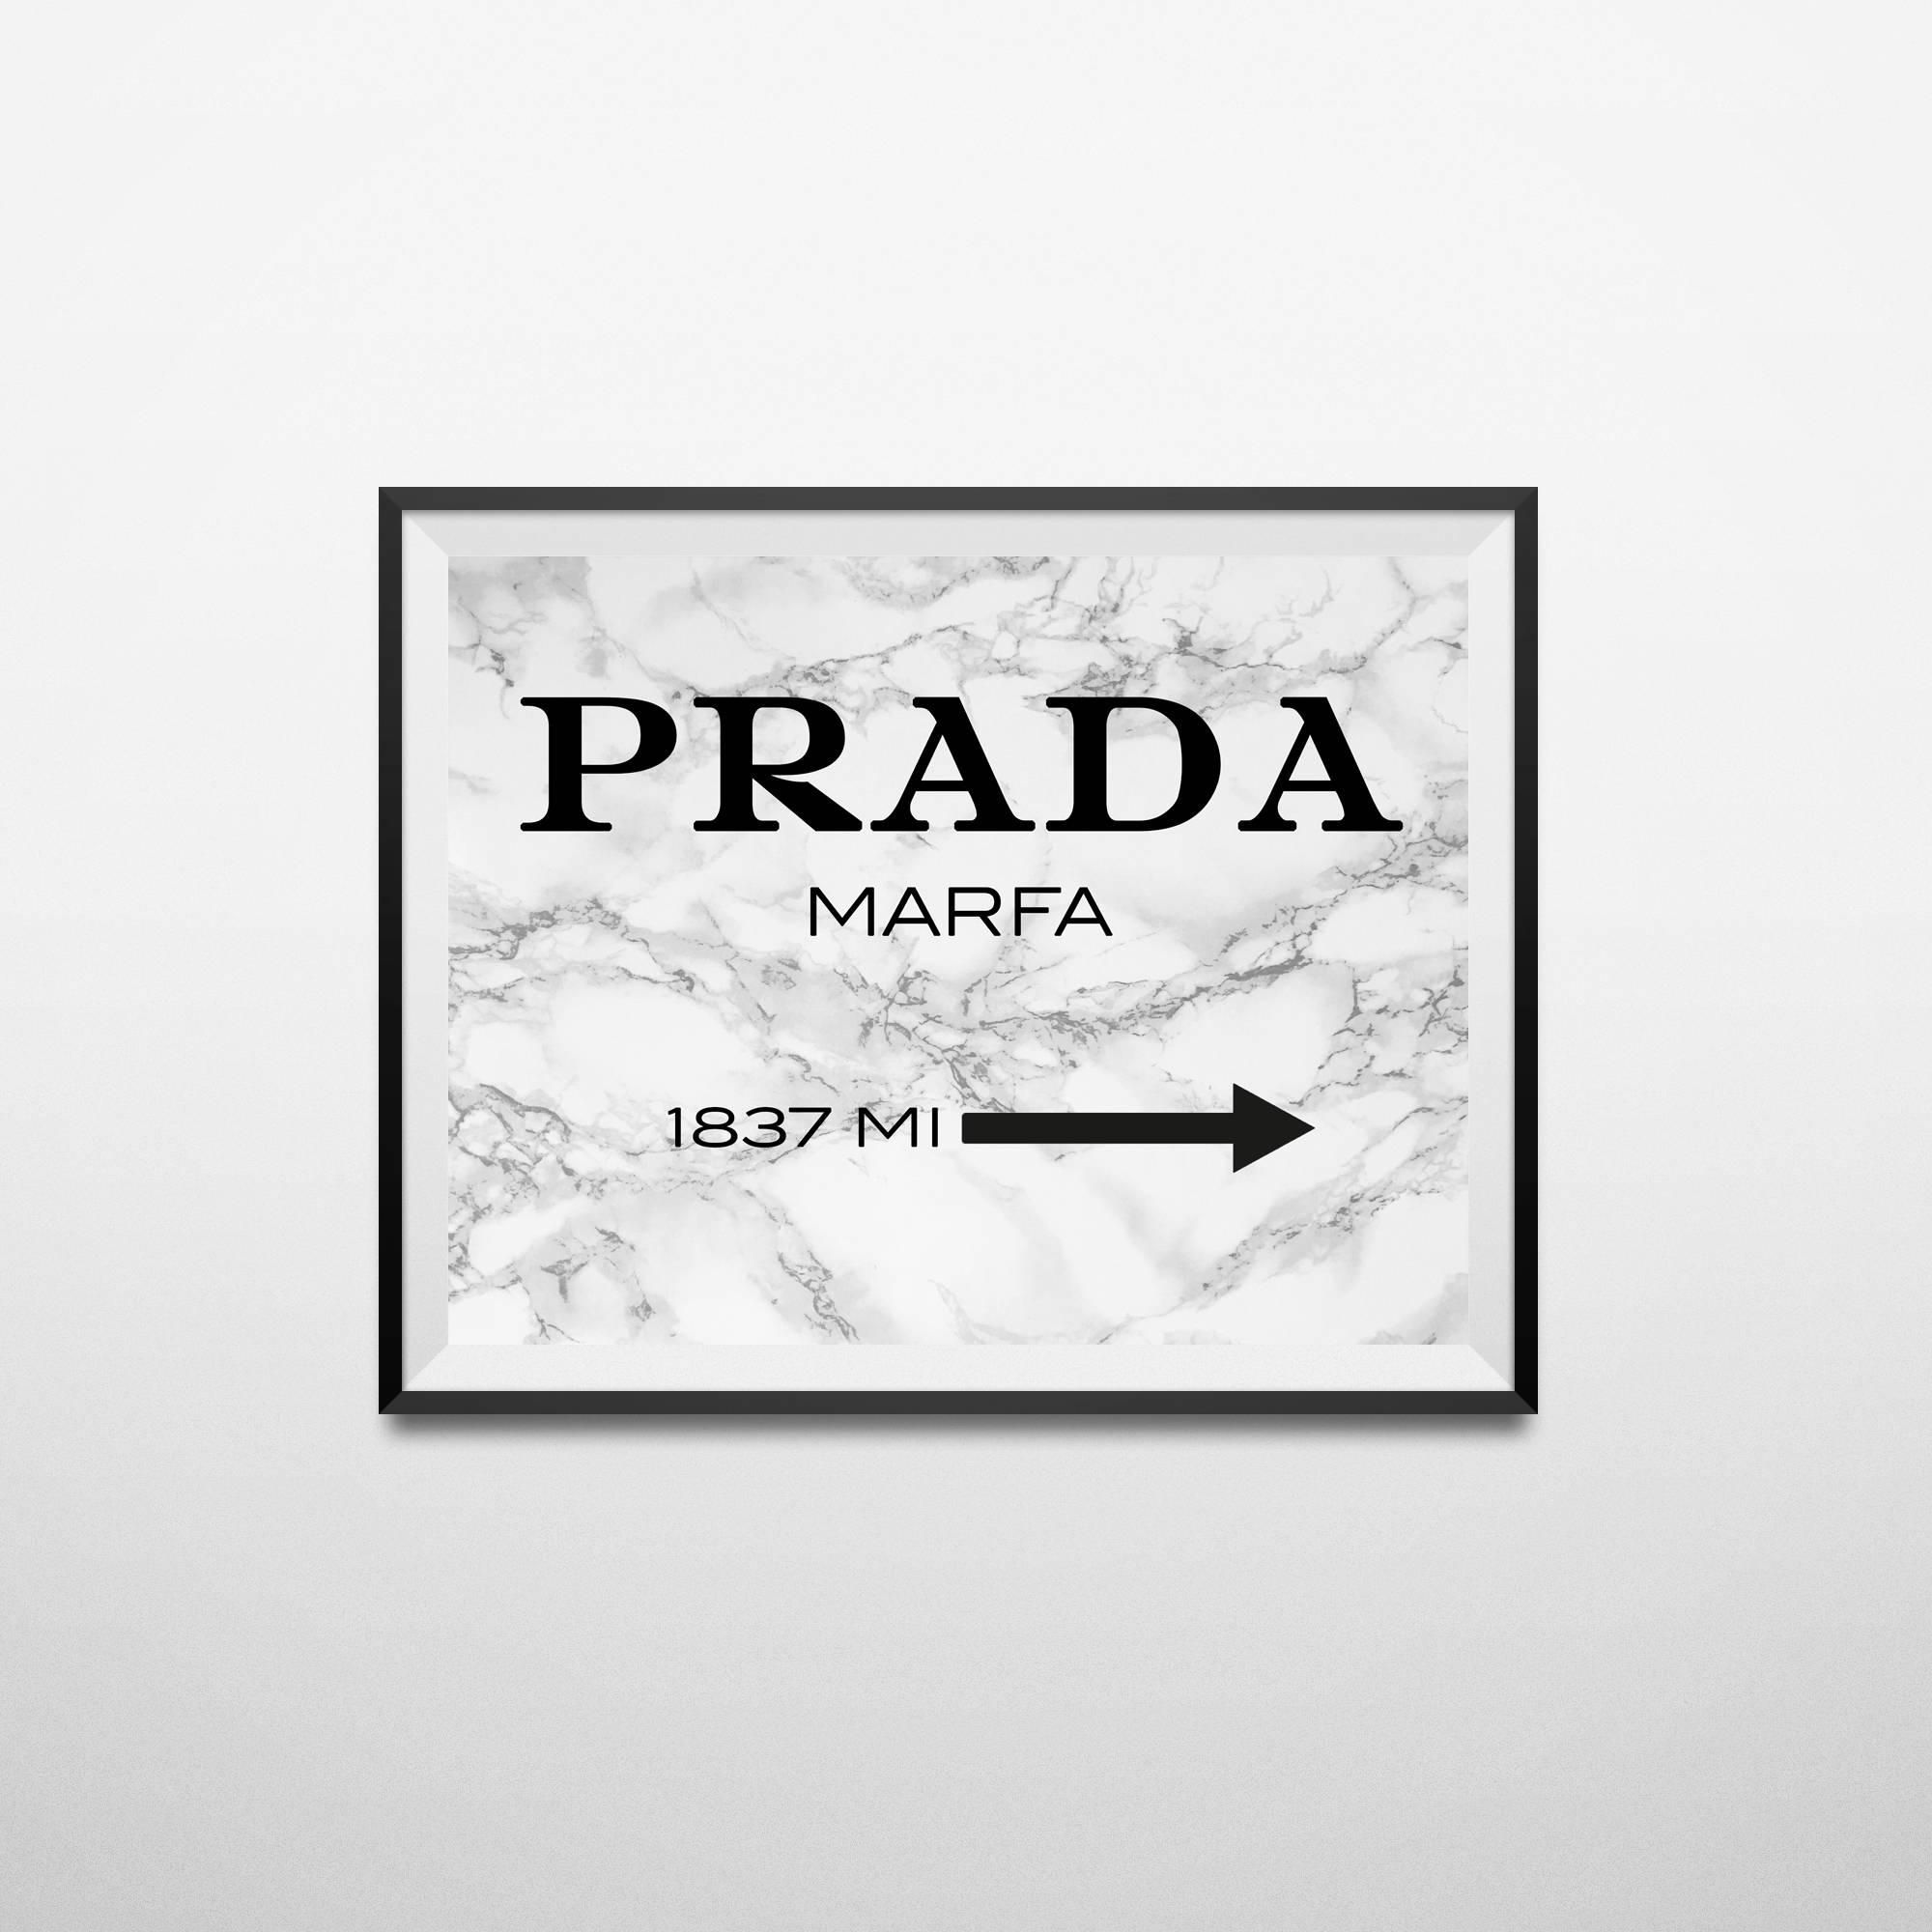 Prada, Prada Marble, Prada Wall Art, Fashion Print, Prada Marfa Throughout Prada Wall Art (View 13 of 20)